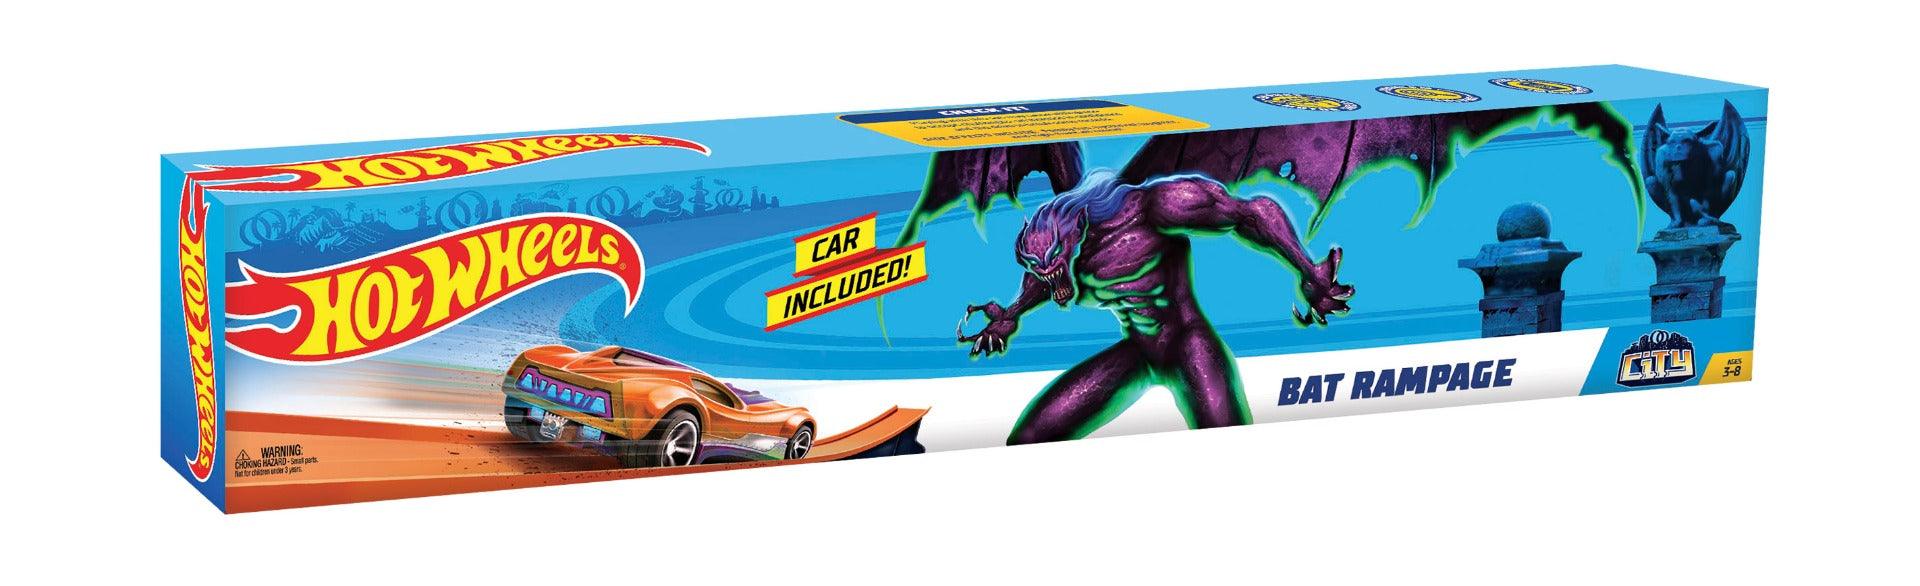 Hot Wheels Space Bat Rampage Trackset includes 1 Die-Cast Car